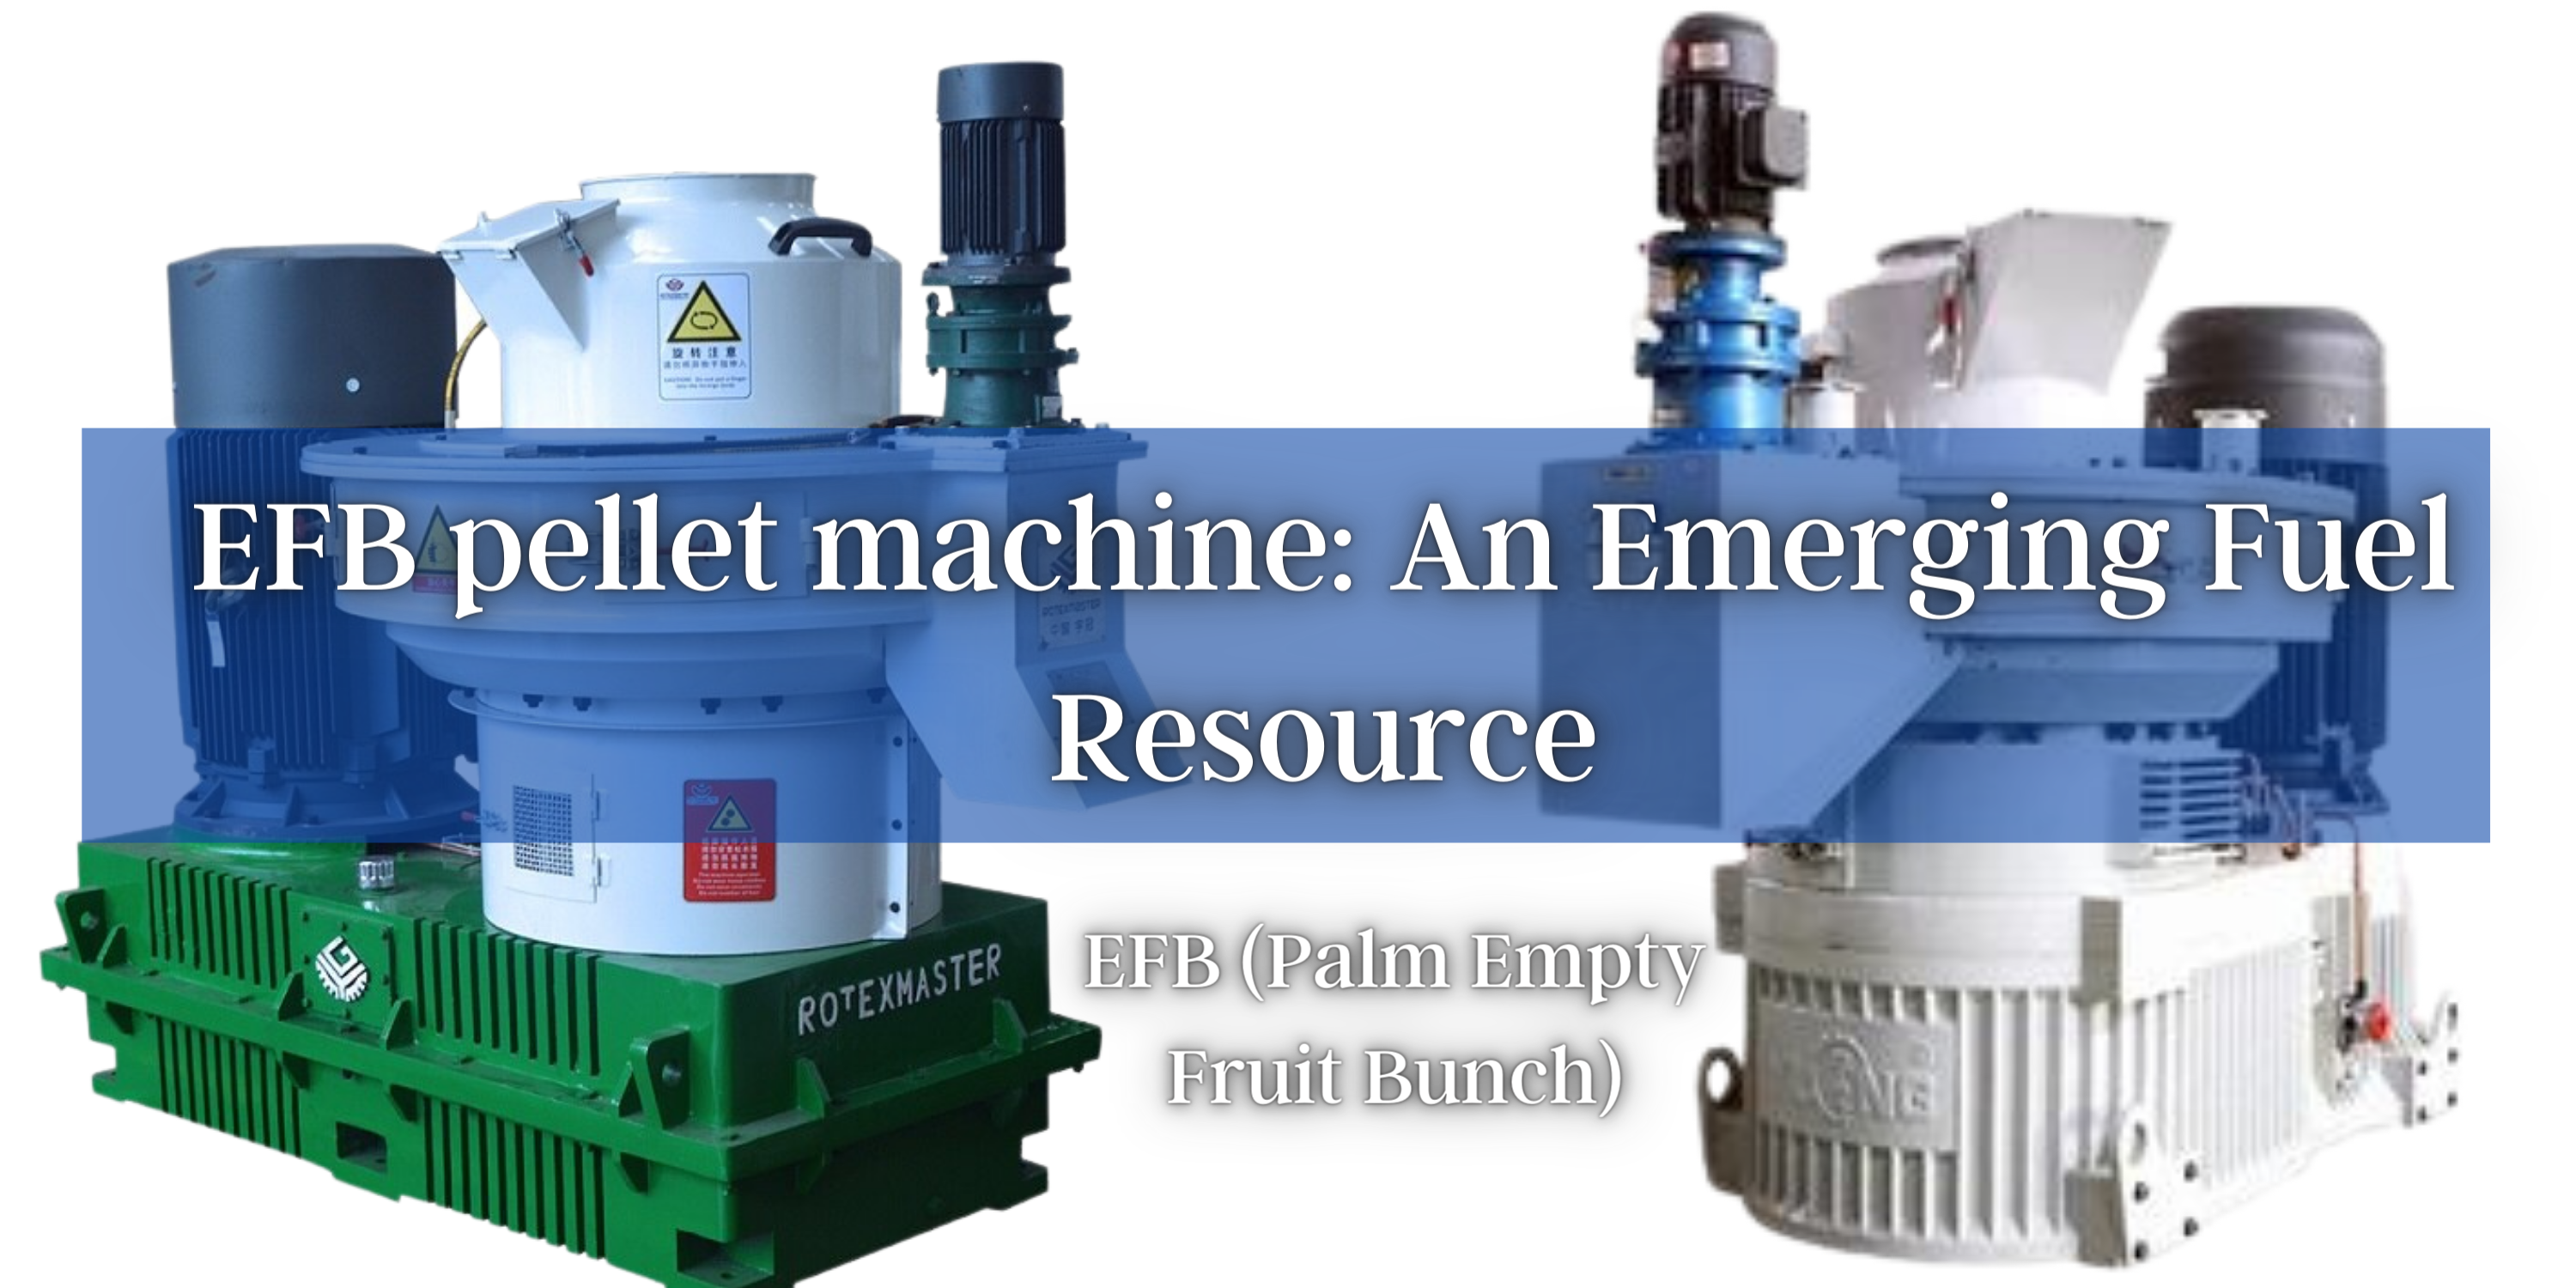 EFB pellet machine: An Emerging Fuel Resource